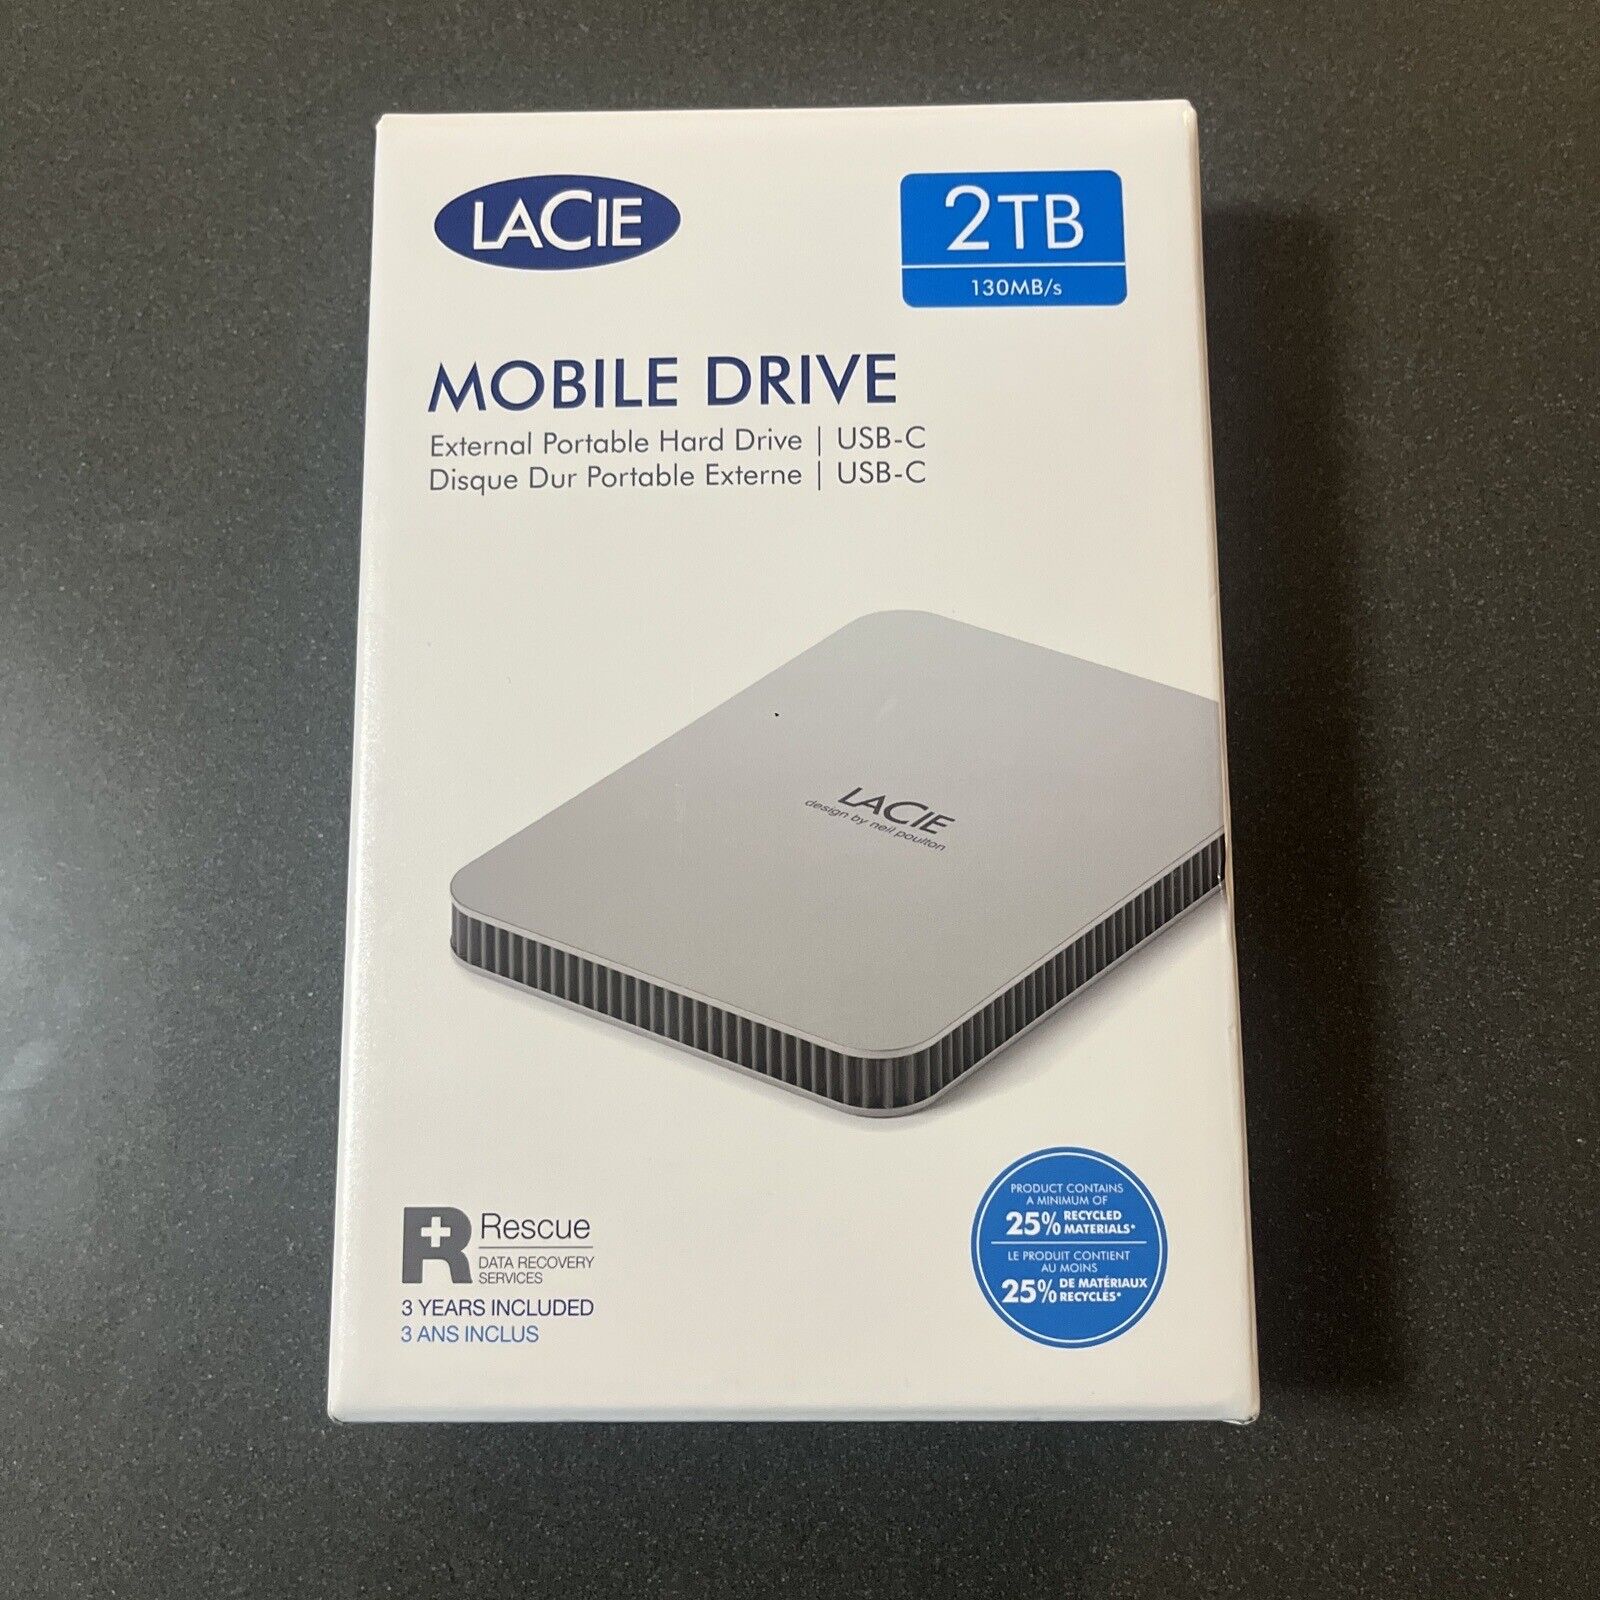 LaCie - Mobile Drive 2TB External USB Portable Hard Drive - Space Gray (2022)